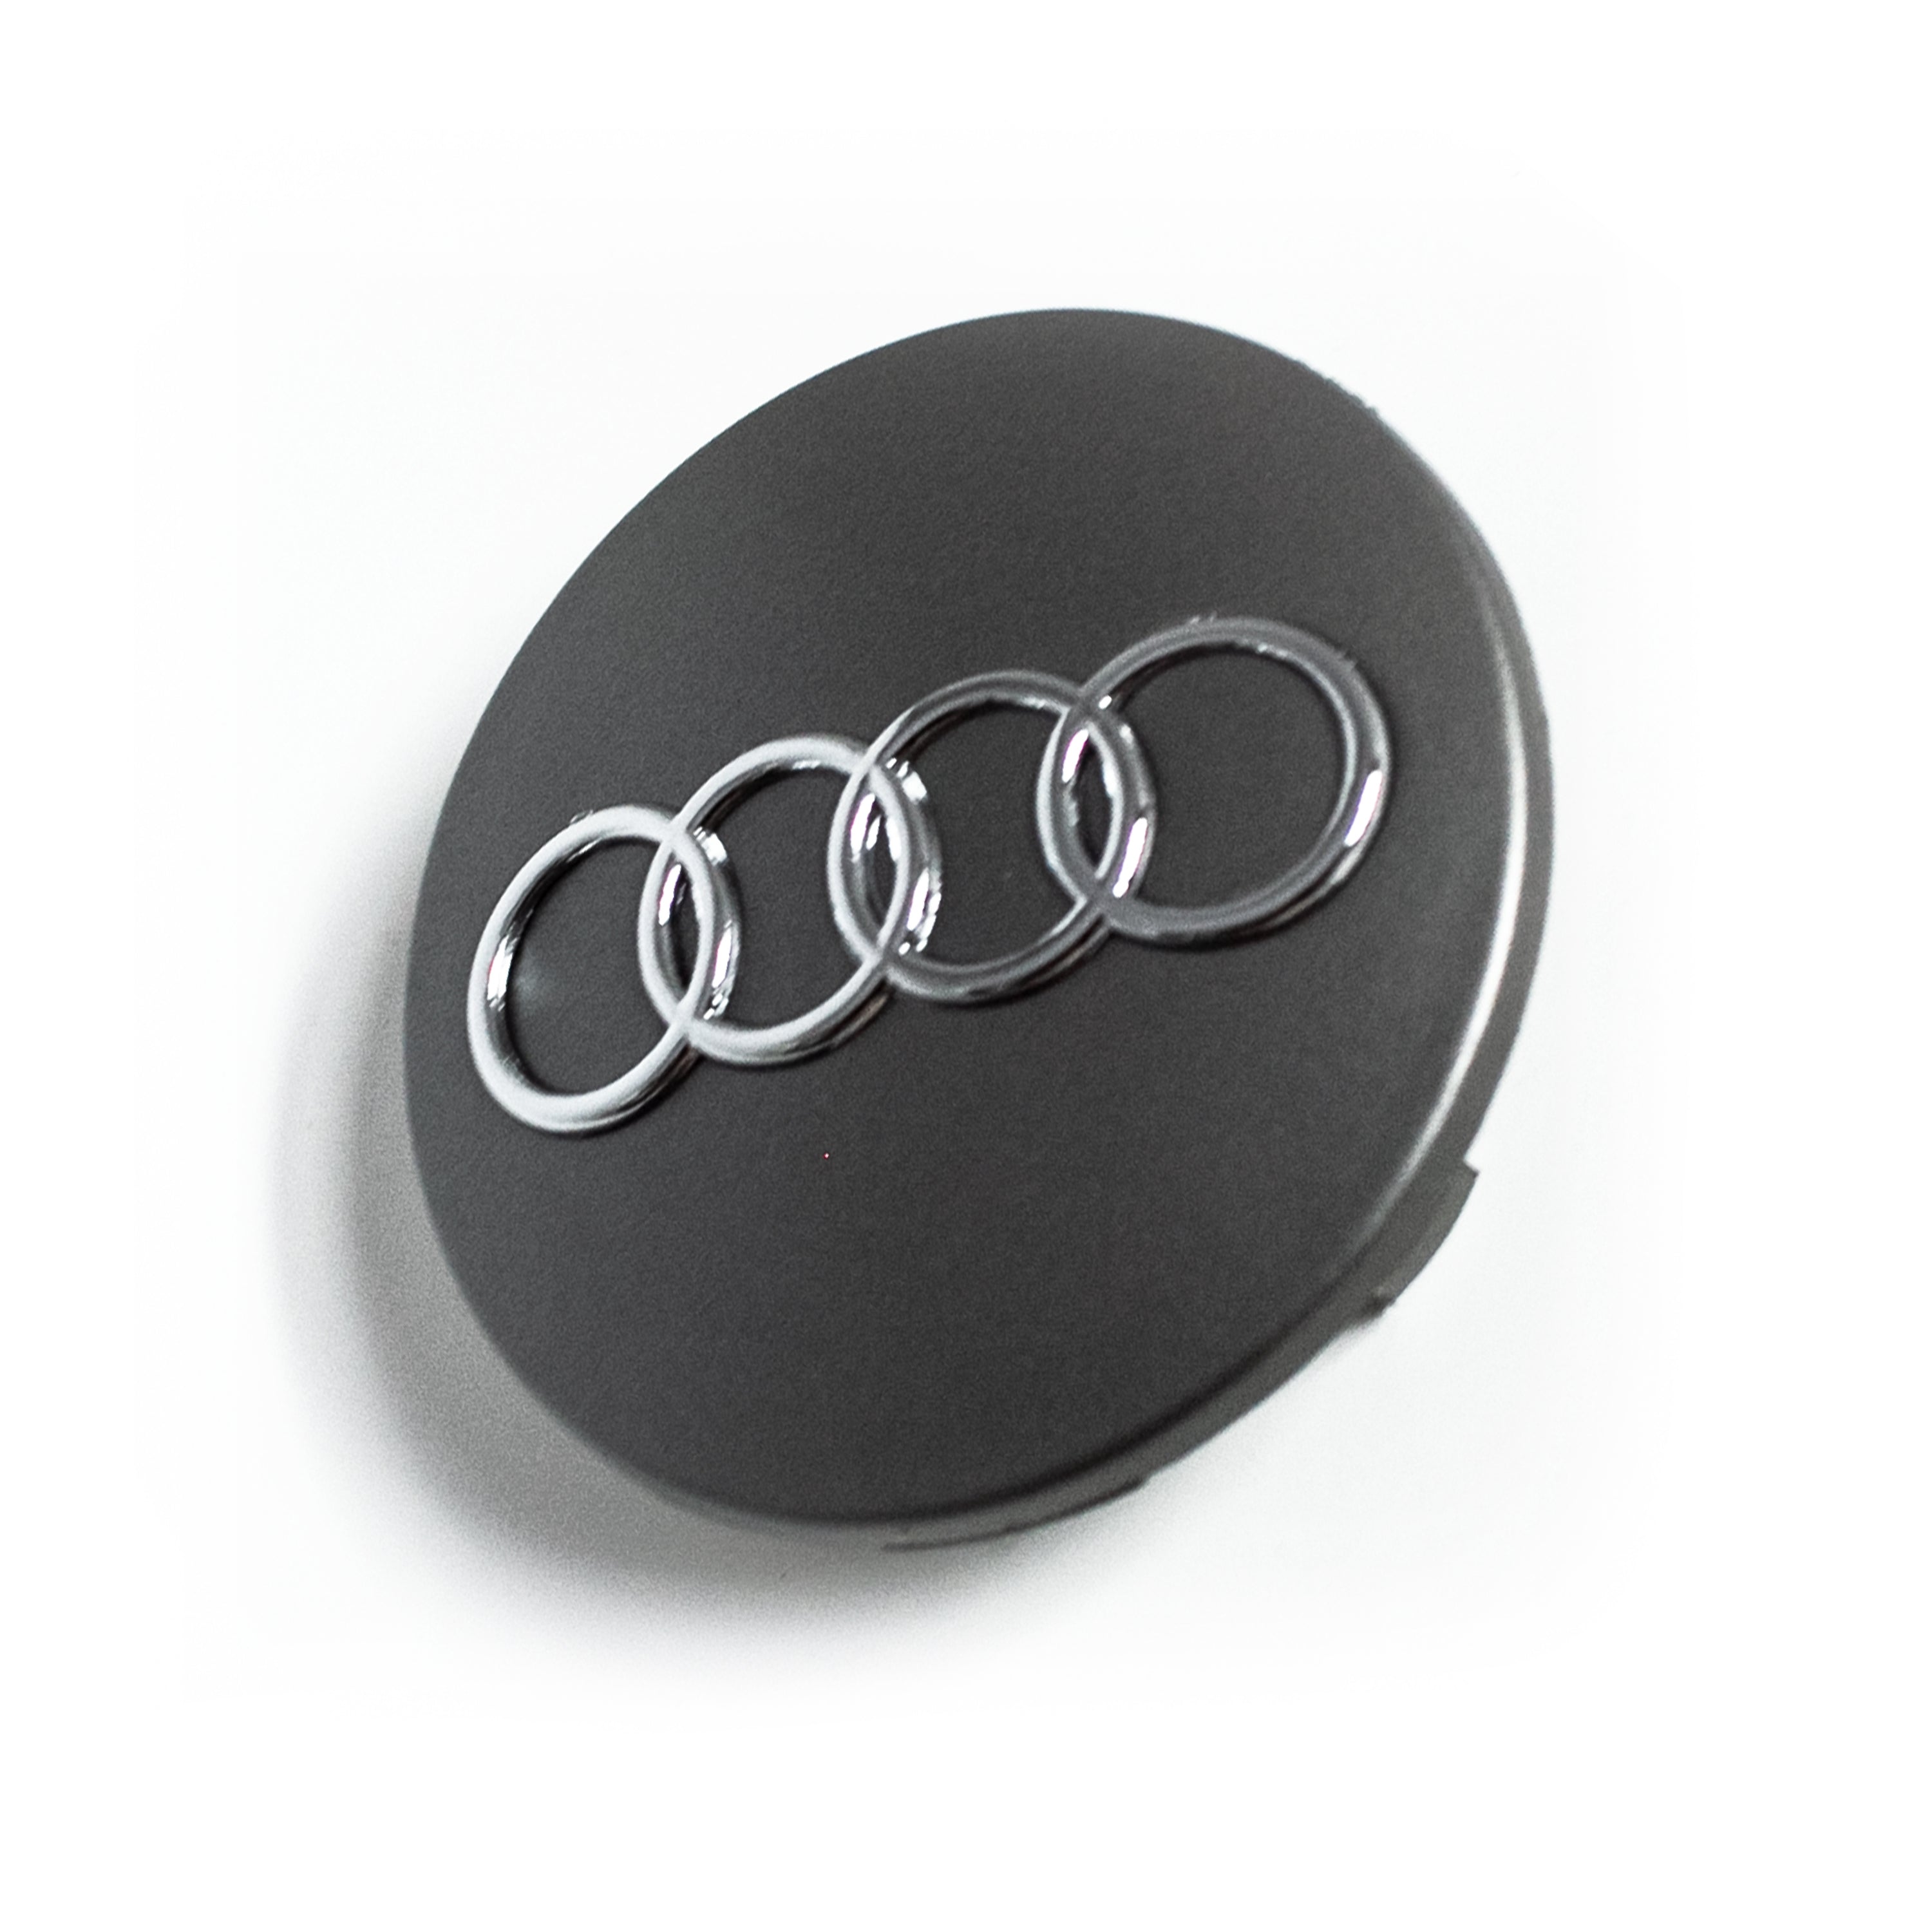 4PCS 68mm Black Audi Wheel Center Caps Fits C58834 Audi A3, A4, A5